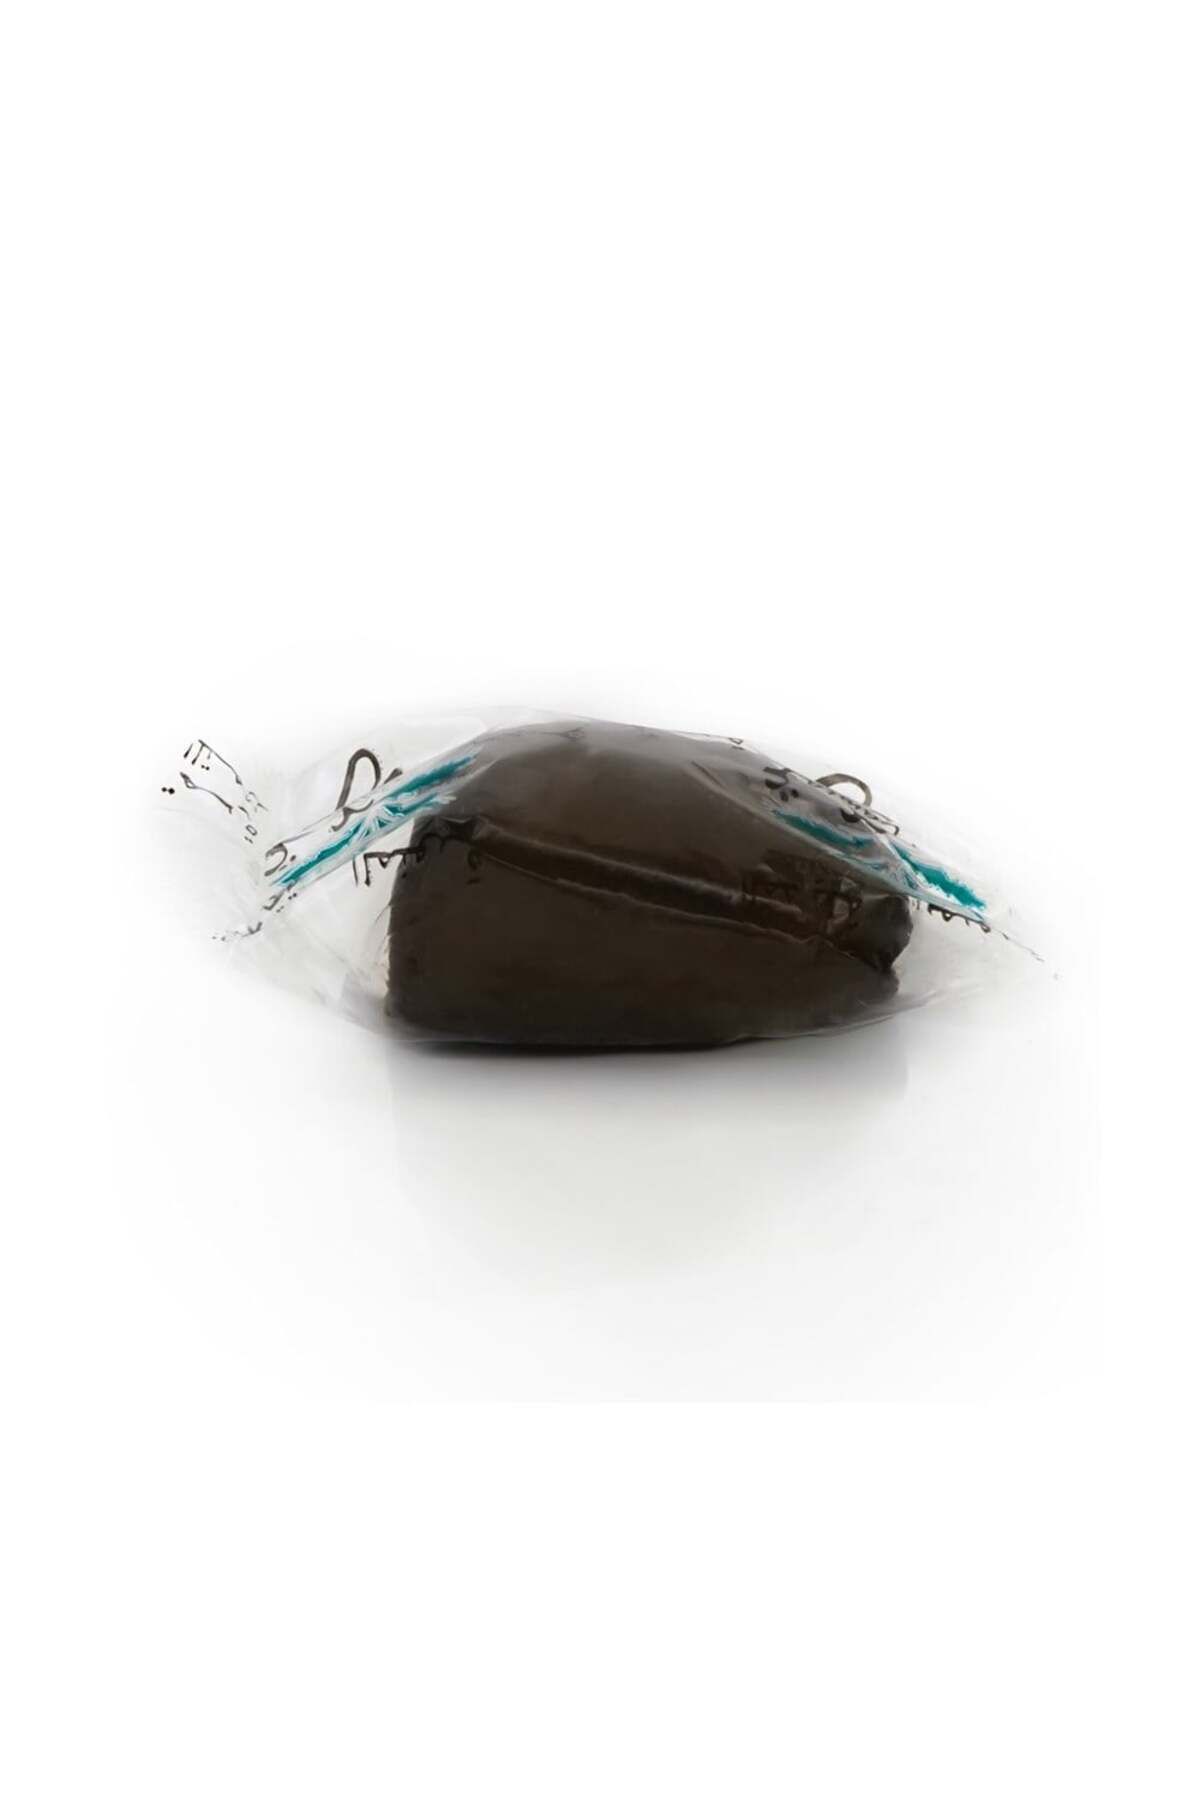 Adnan Efendi Çikolatalı Bademli Hurma - 500 gr